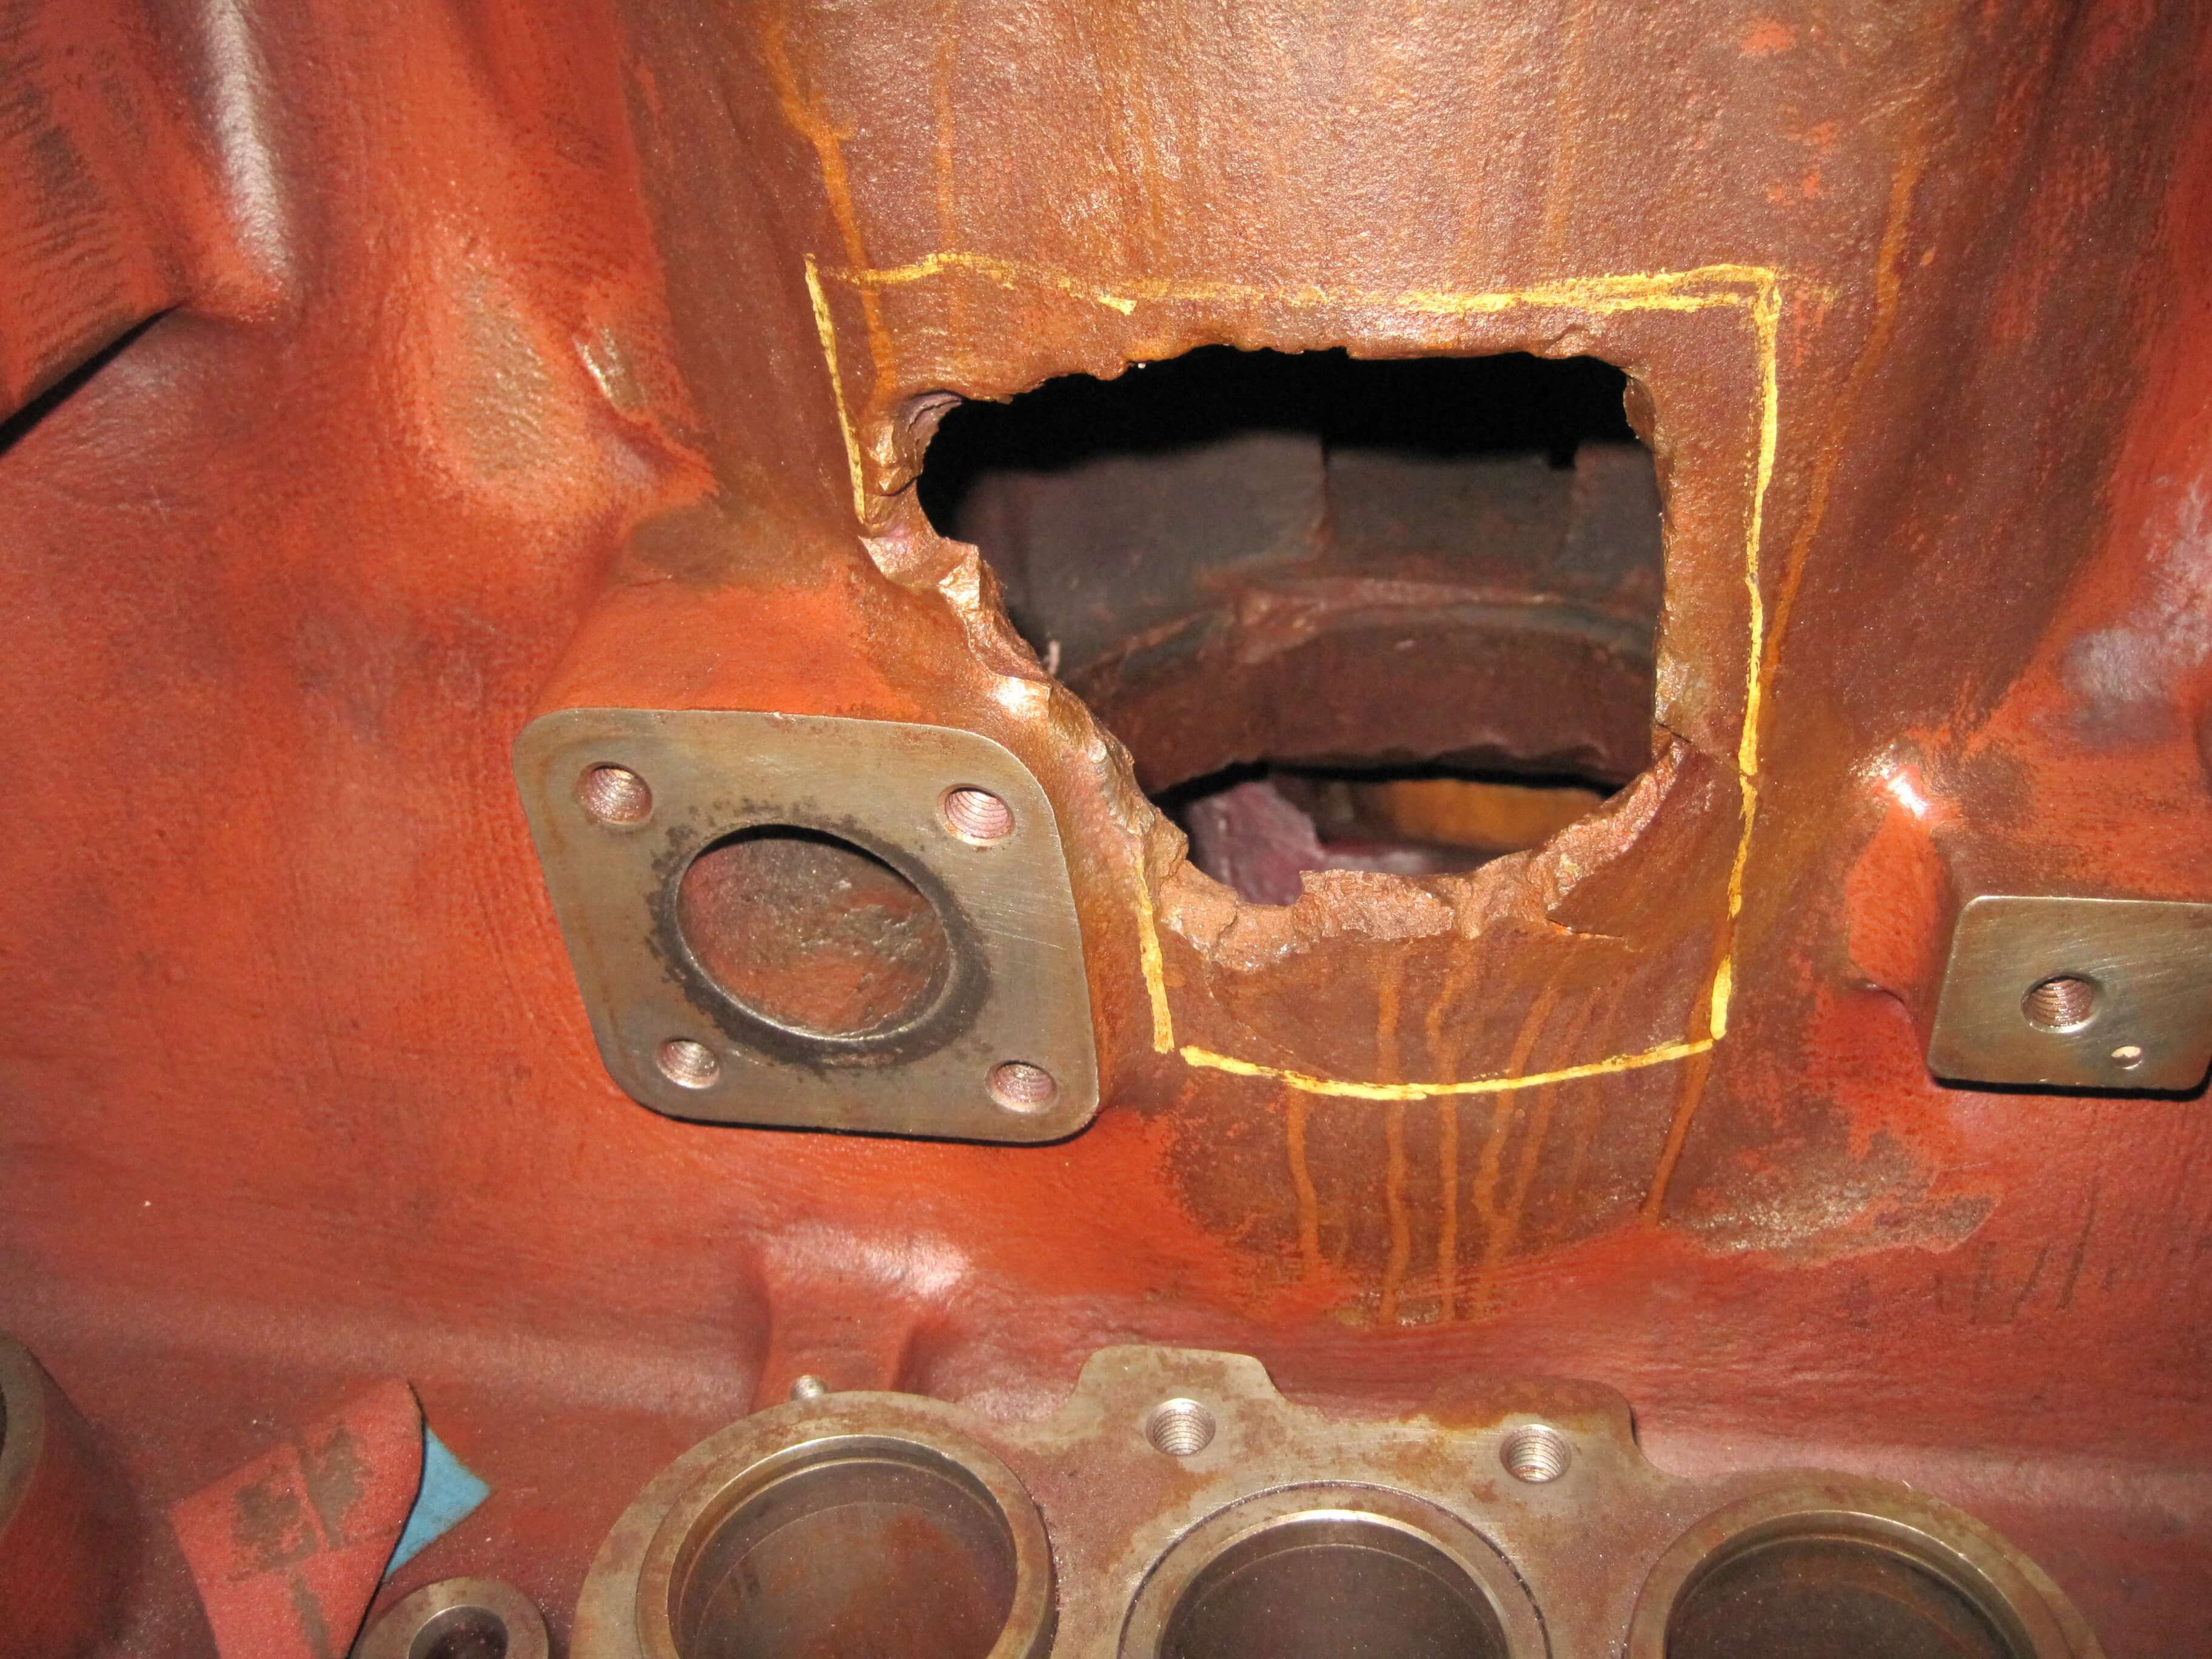 Engine Block Repair/Cast Iron Repair - Block damage caused by connecting rod failure